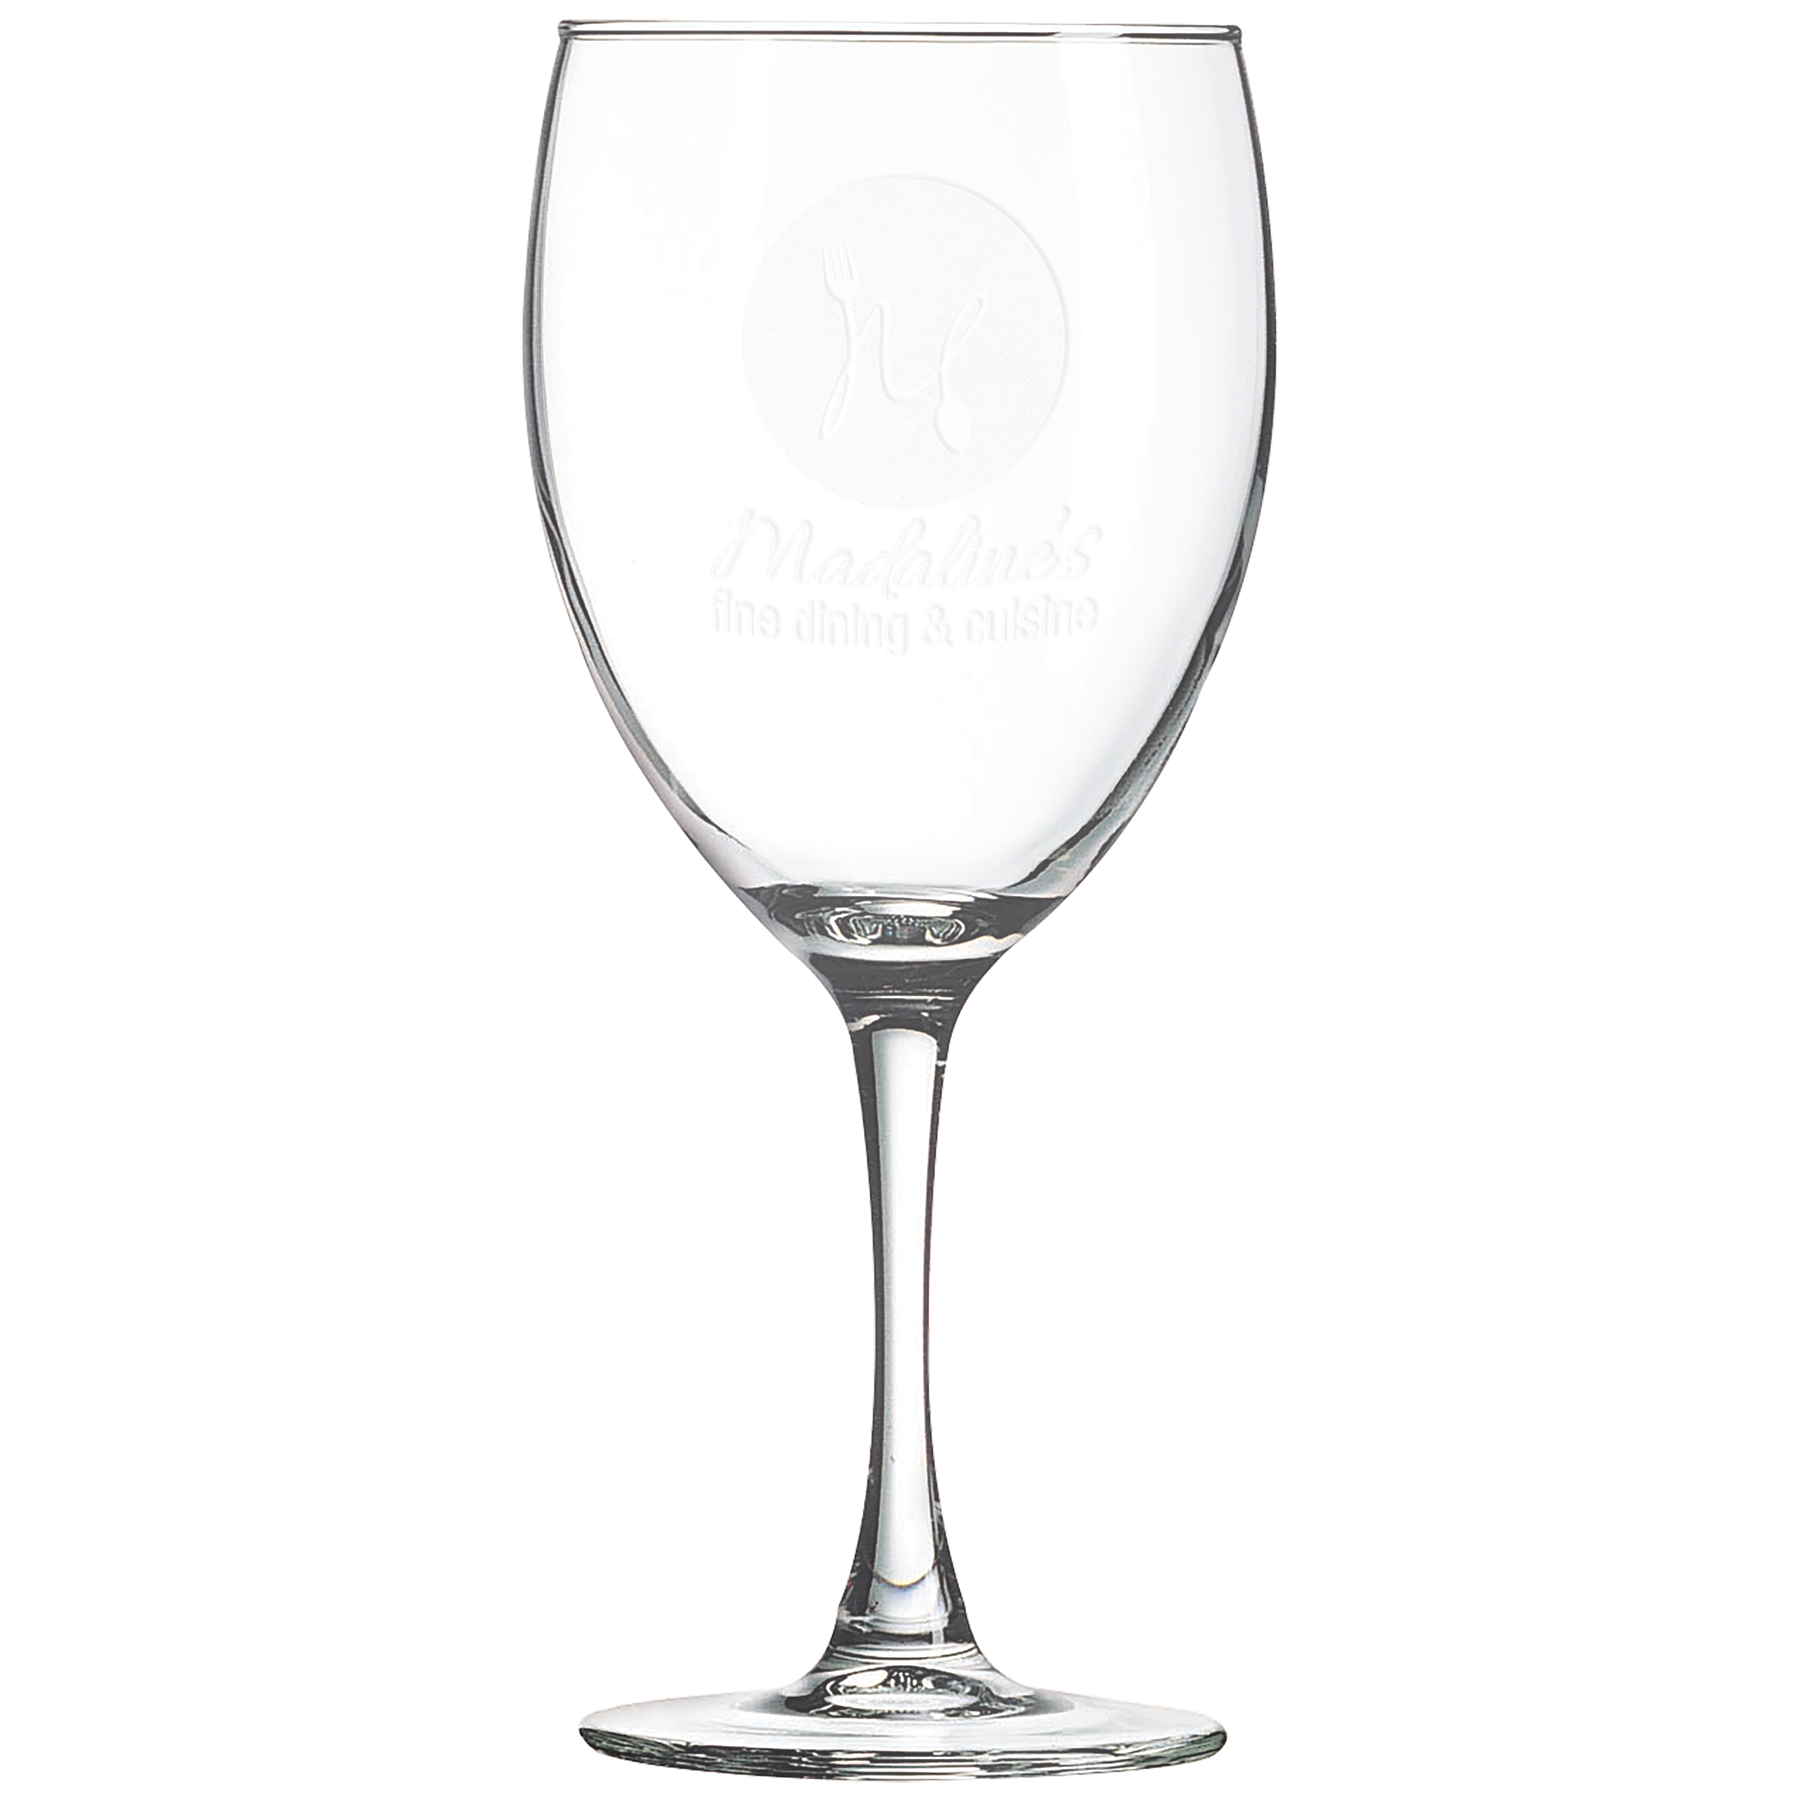 Polar Camel Glassware 10.5 oz. Wine Glass, Laser Engraved - Craftworks NW, LLC